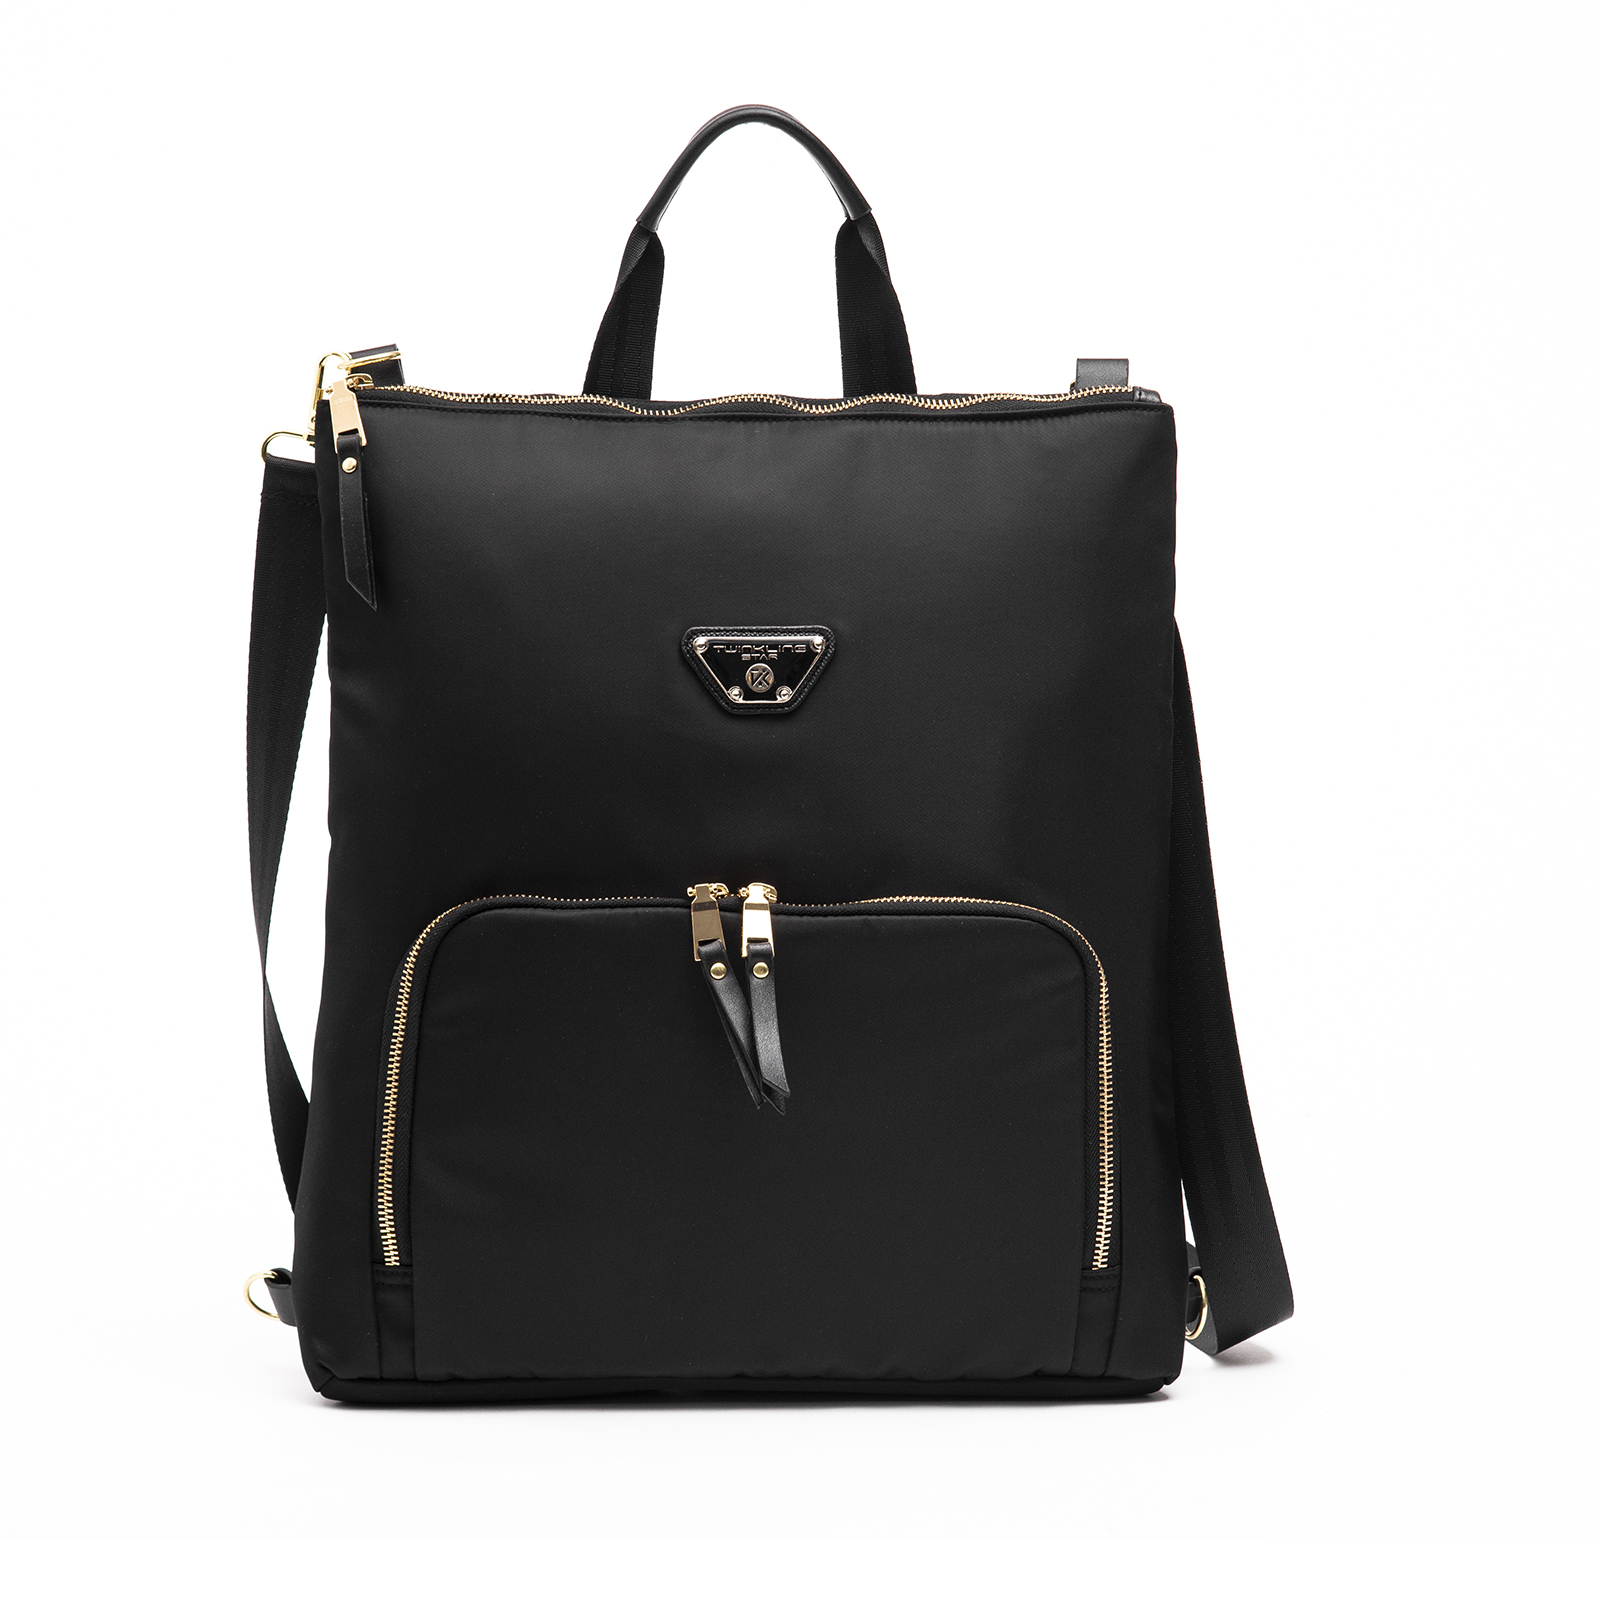 Reasonable price Fashion Trend School Bag – Fashion simple black woman shoulder bag – Twinkling Star